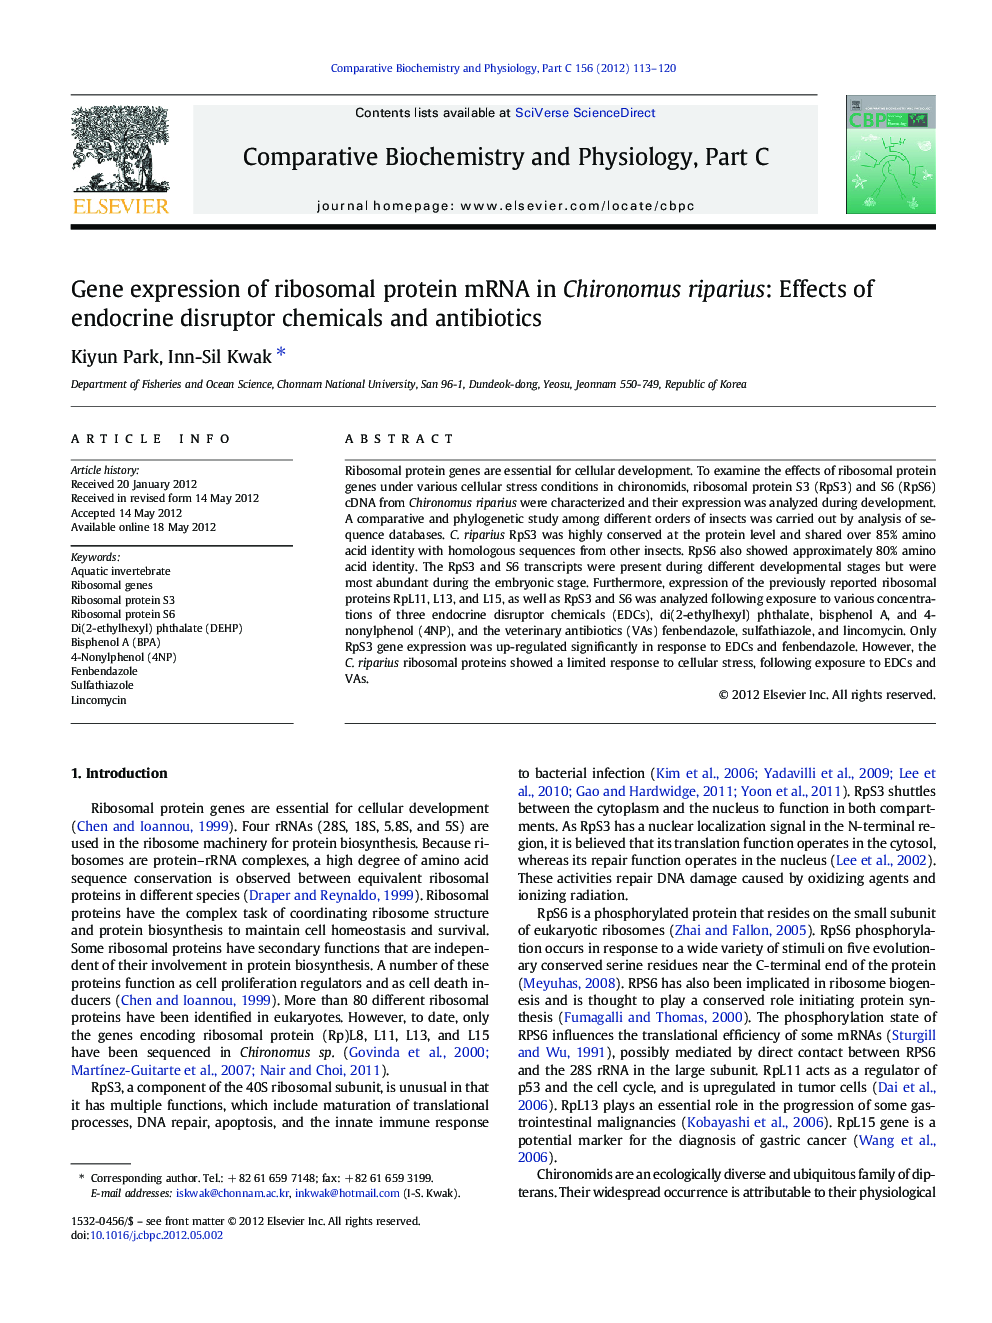 Gene expression of ribosomal protein mRNA in Chironomus riparius: Effects of endocrine disruptor chemicals and antibiotics